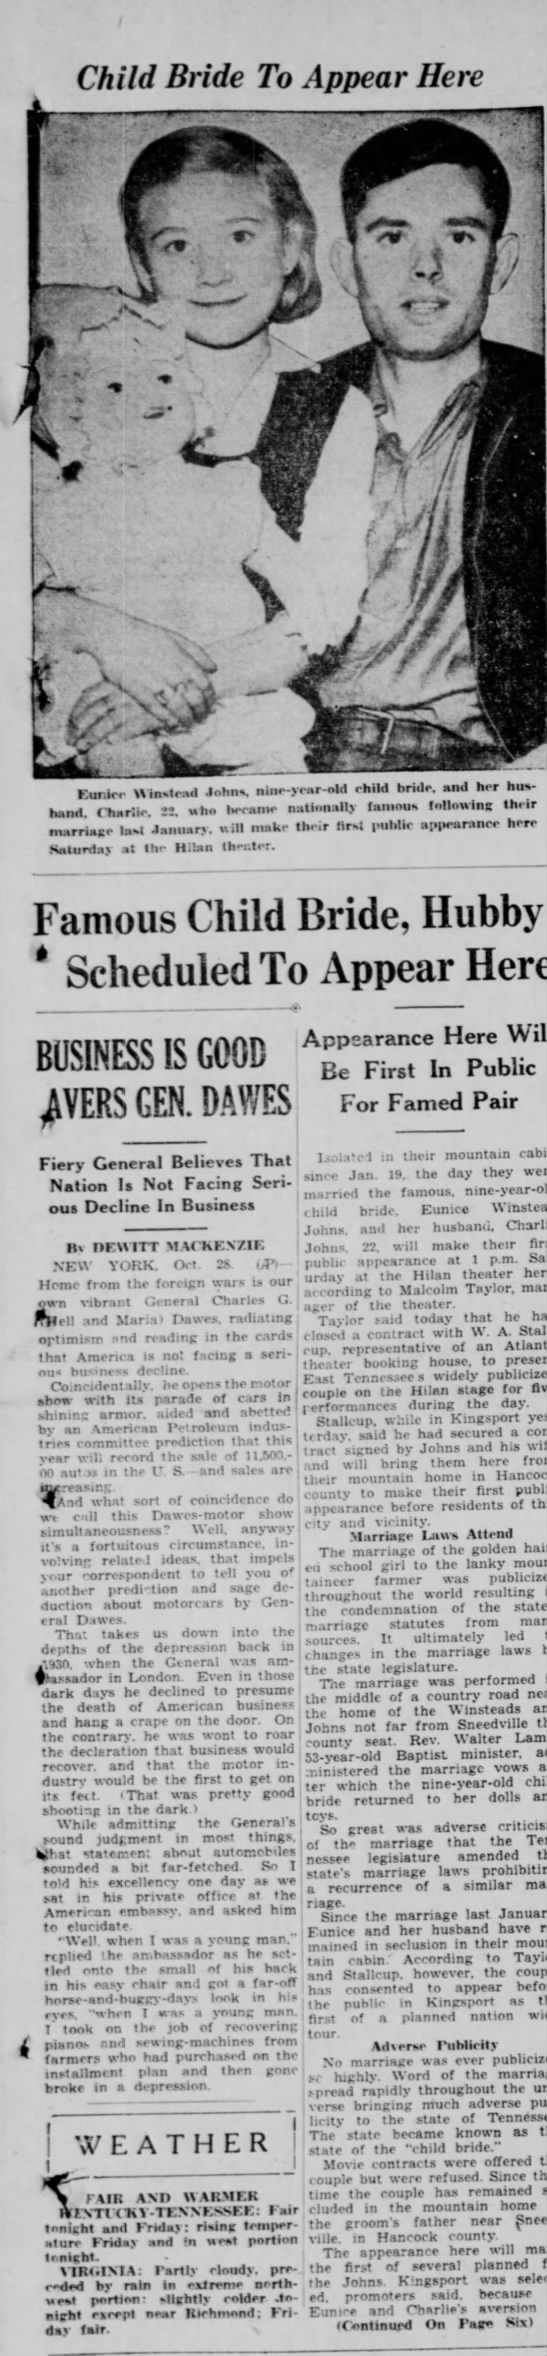 Child Bride-Hancock County Tenn.
Eunice Winstead, age 9 
married to Charlie Johns age 22. - 